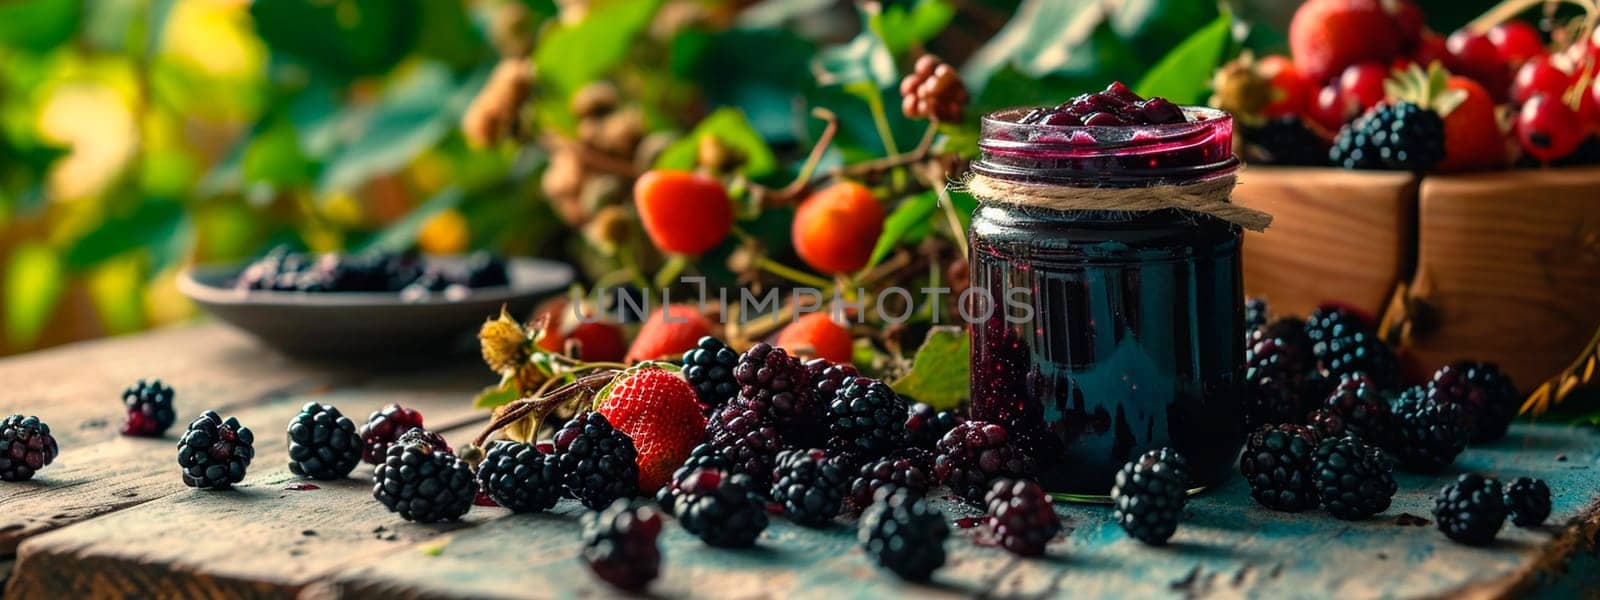 Blackberry jam in the garden. Selective focus. by mila1784